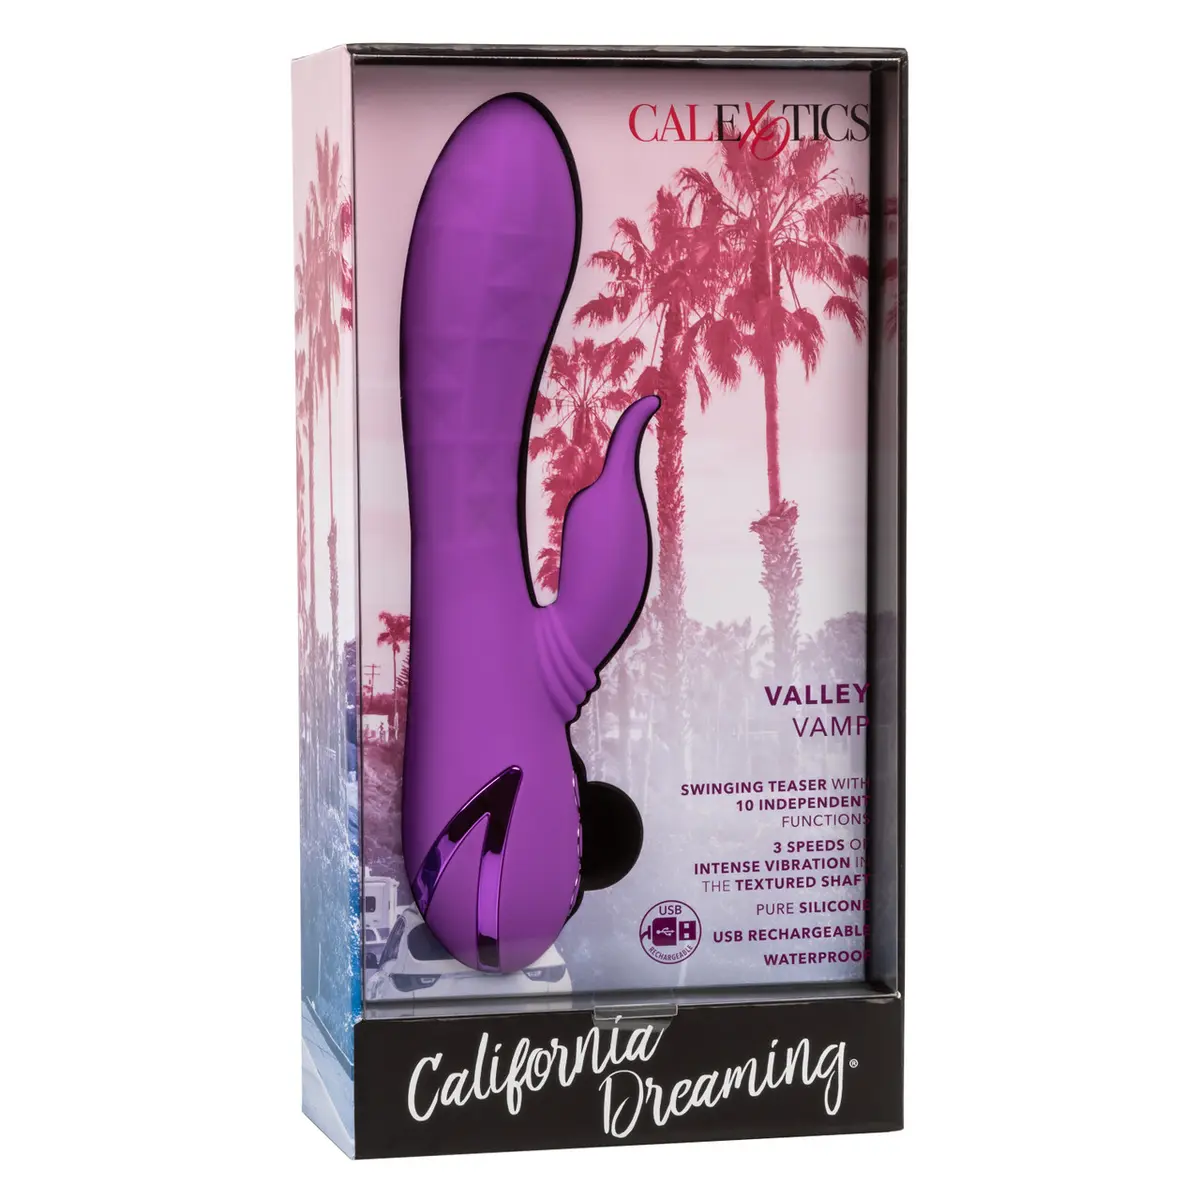 3. Calexotics - California Dreaming Vibrator - Valley Vamp